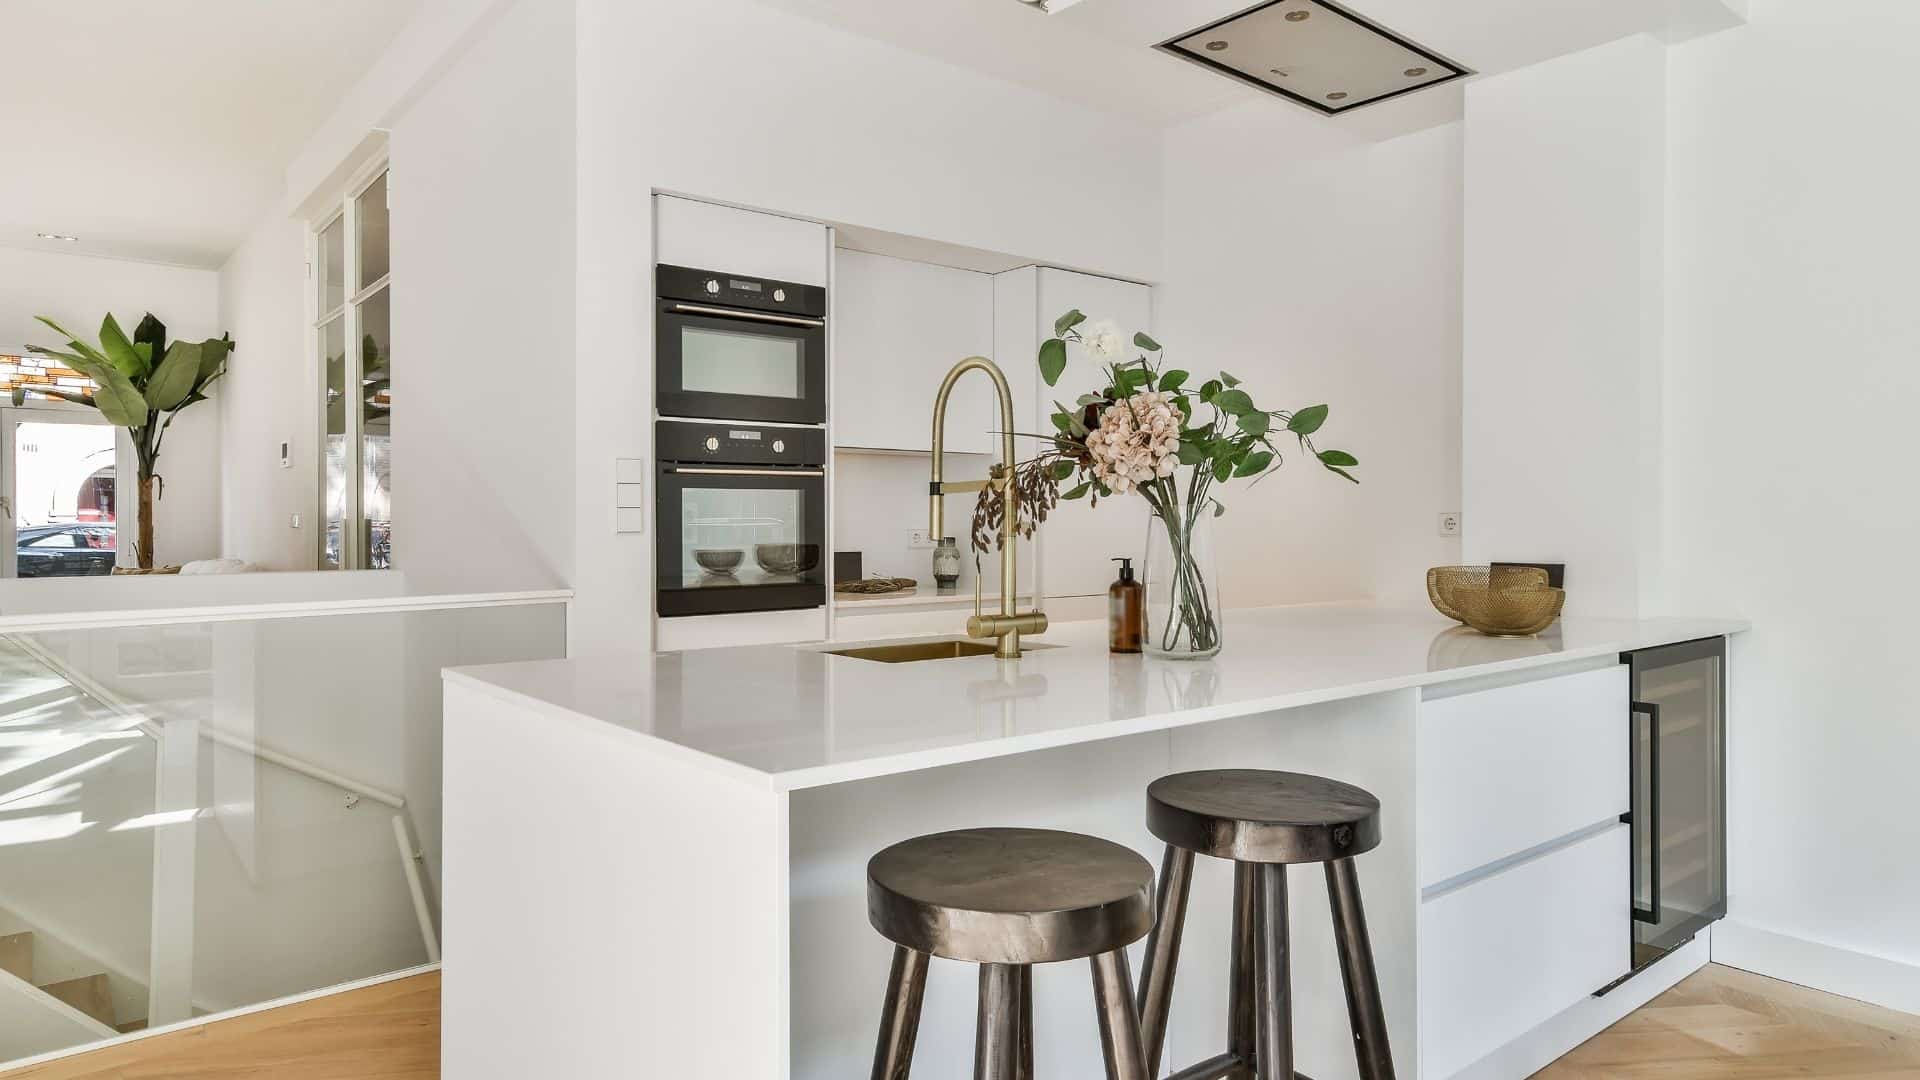 Small white kitchen with white countertop